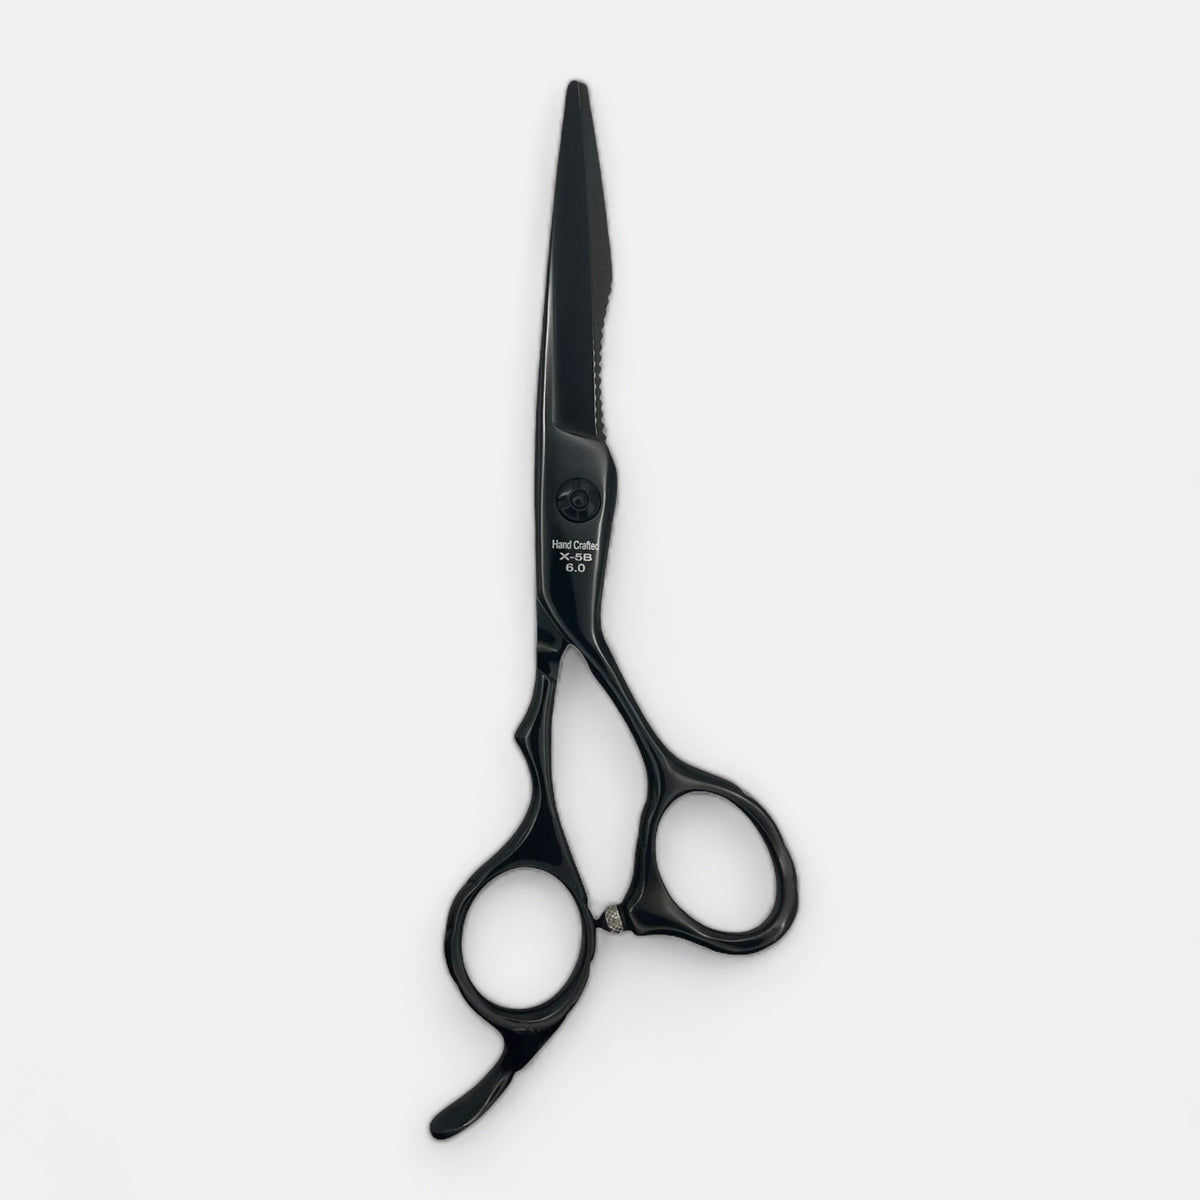 X-5 Barber Scissors back blade